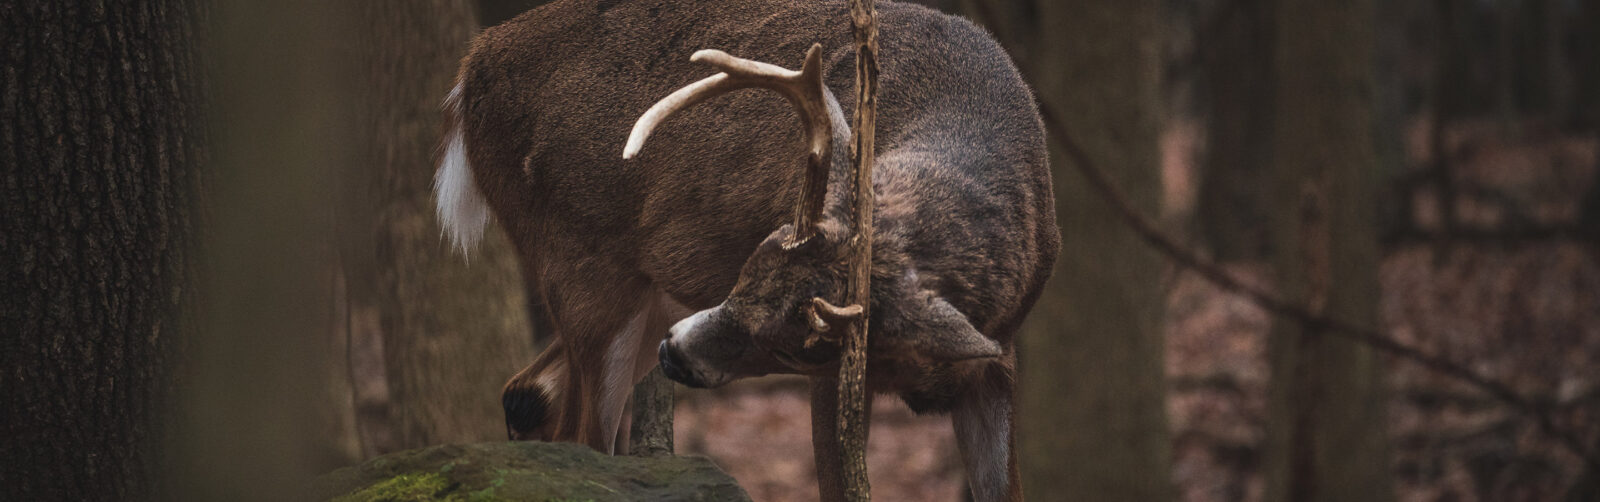 deer rubbing antlers on a branch